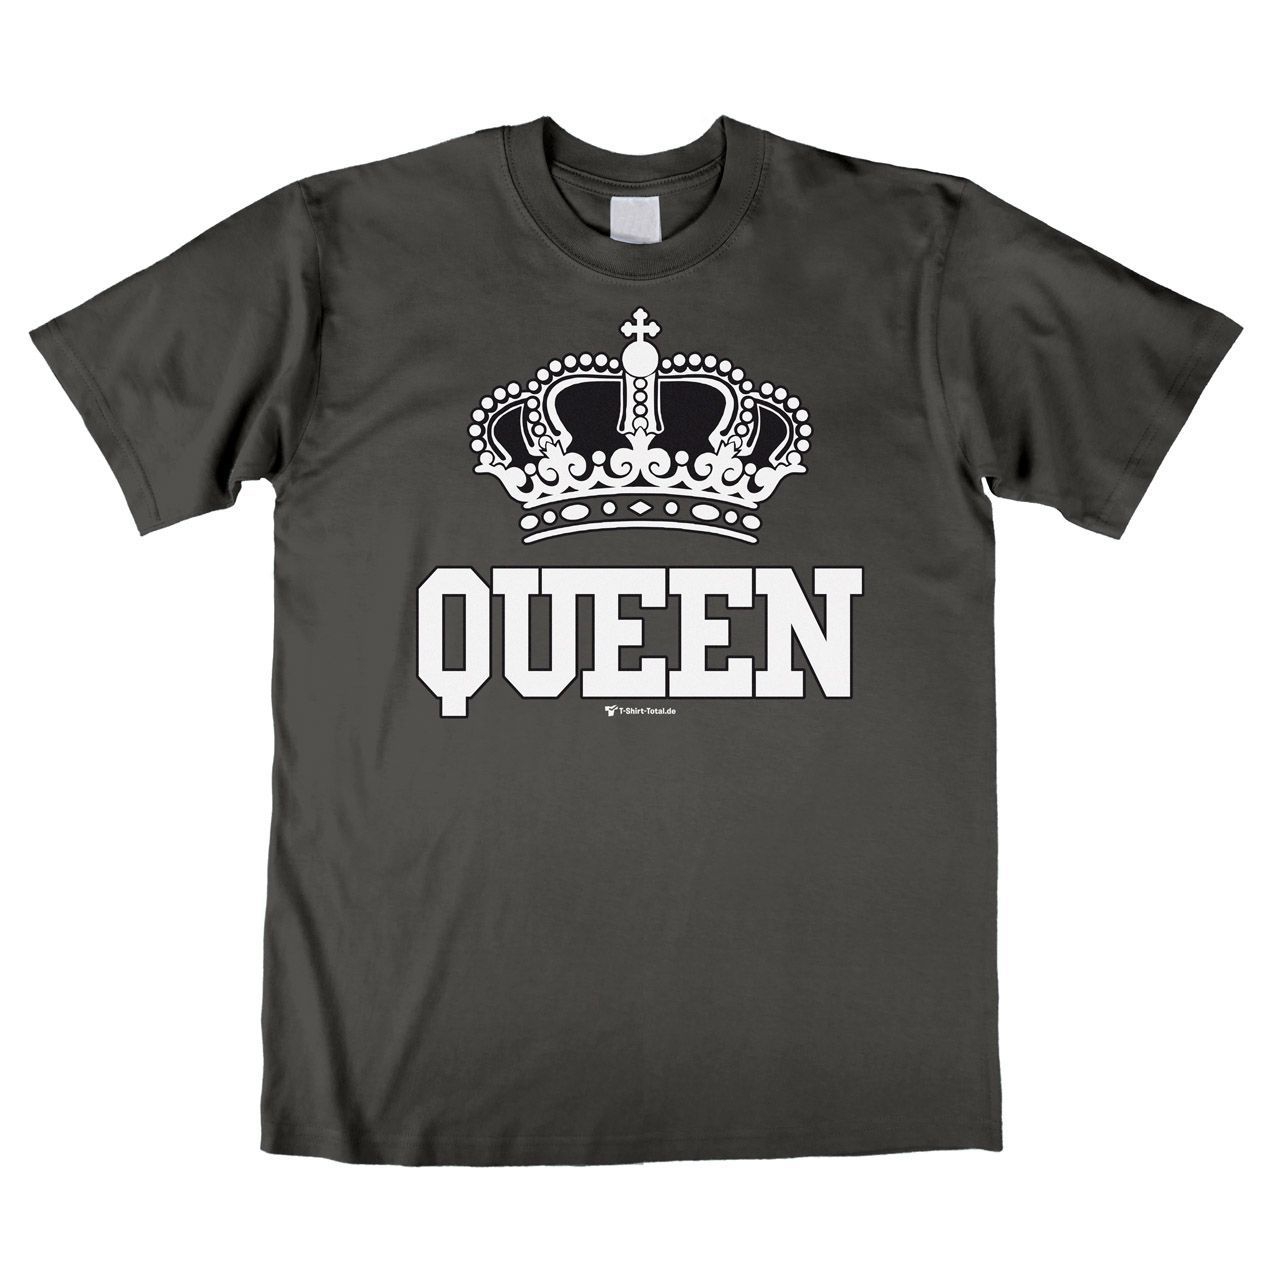 Queen Unisex T-Shirt grau Medium